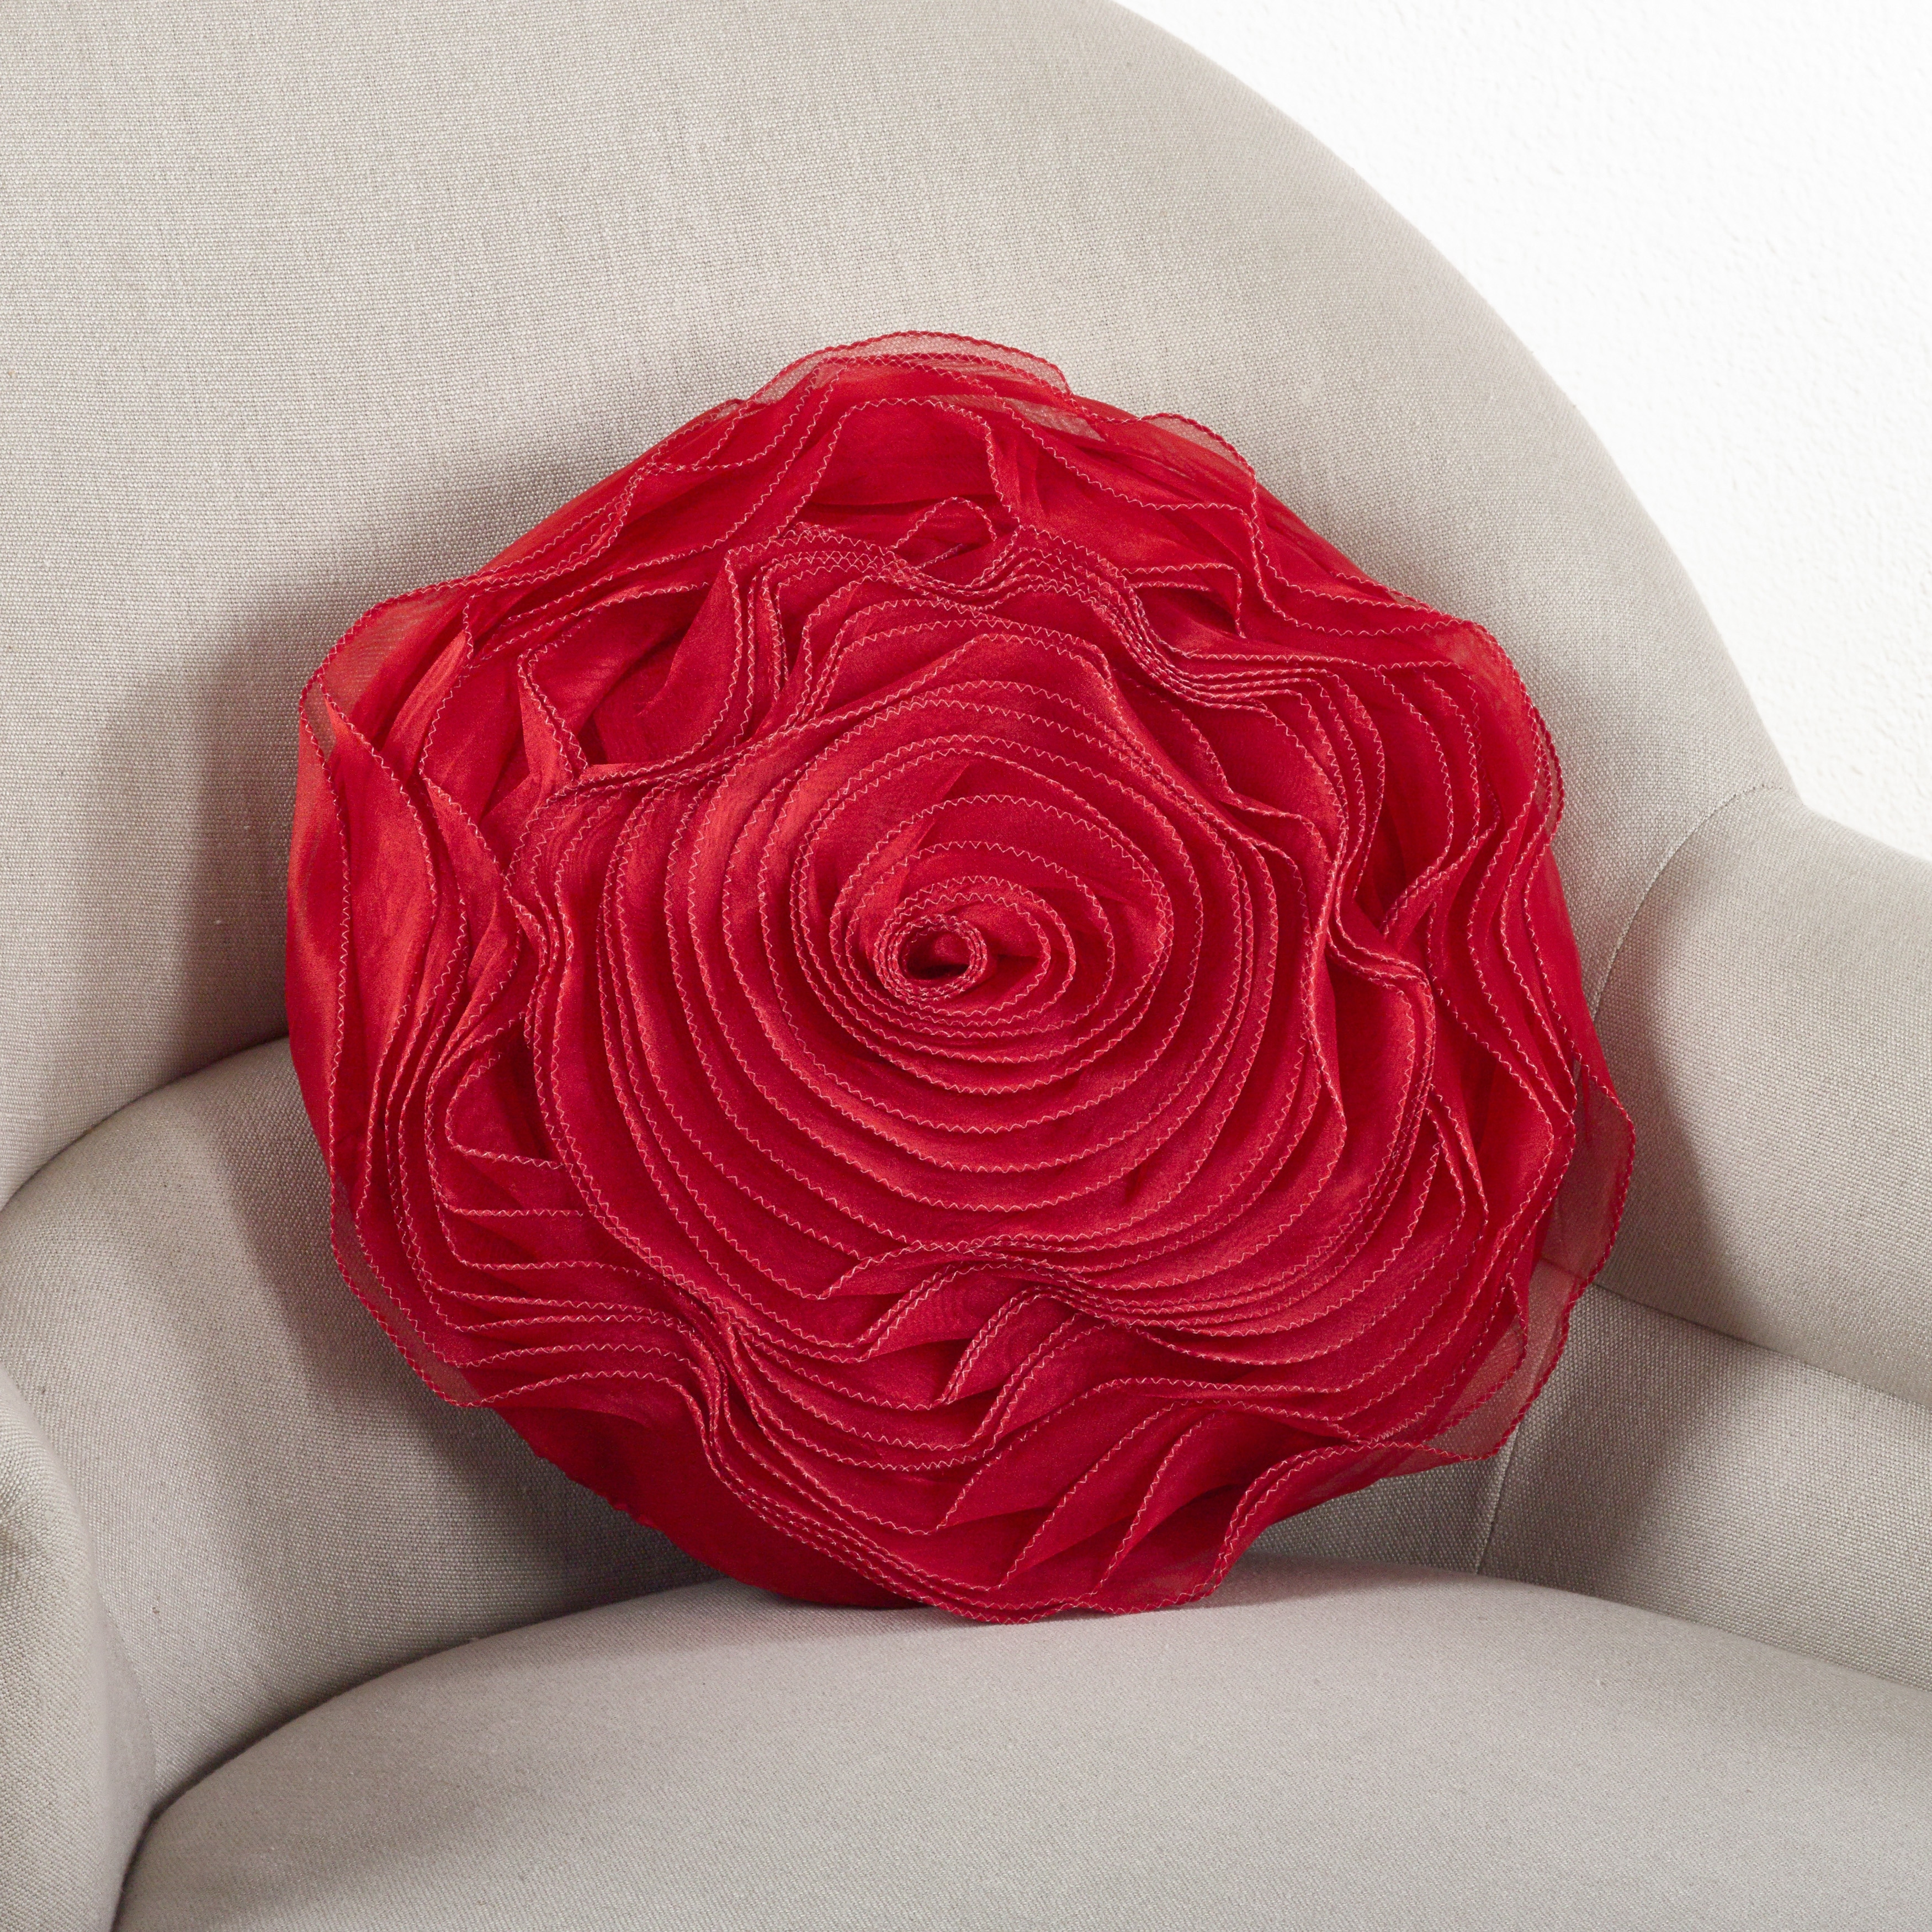 Rose Design Throw Pillow On Sale Bed Bath  Beyond 8649905